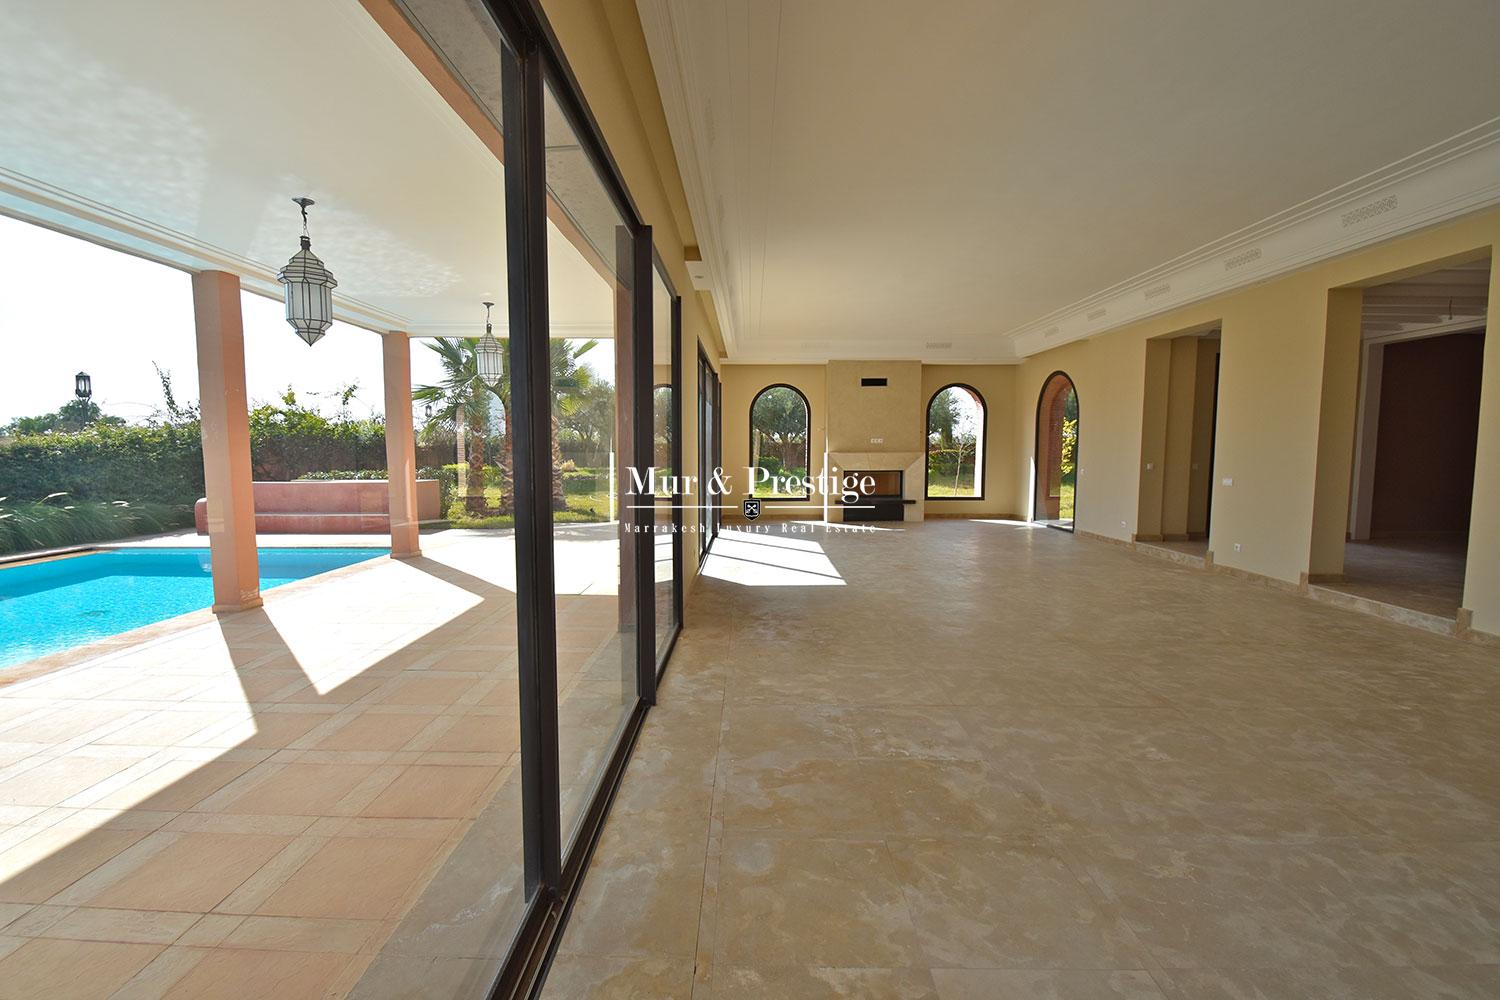 Acheter une villa de luxe a Marrakech